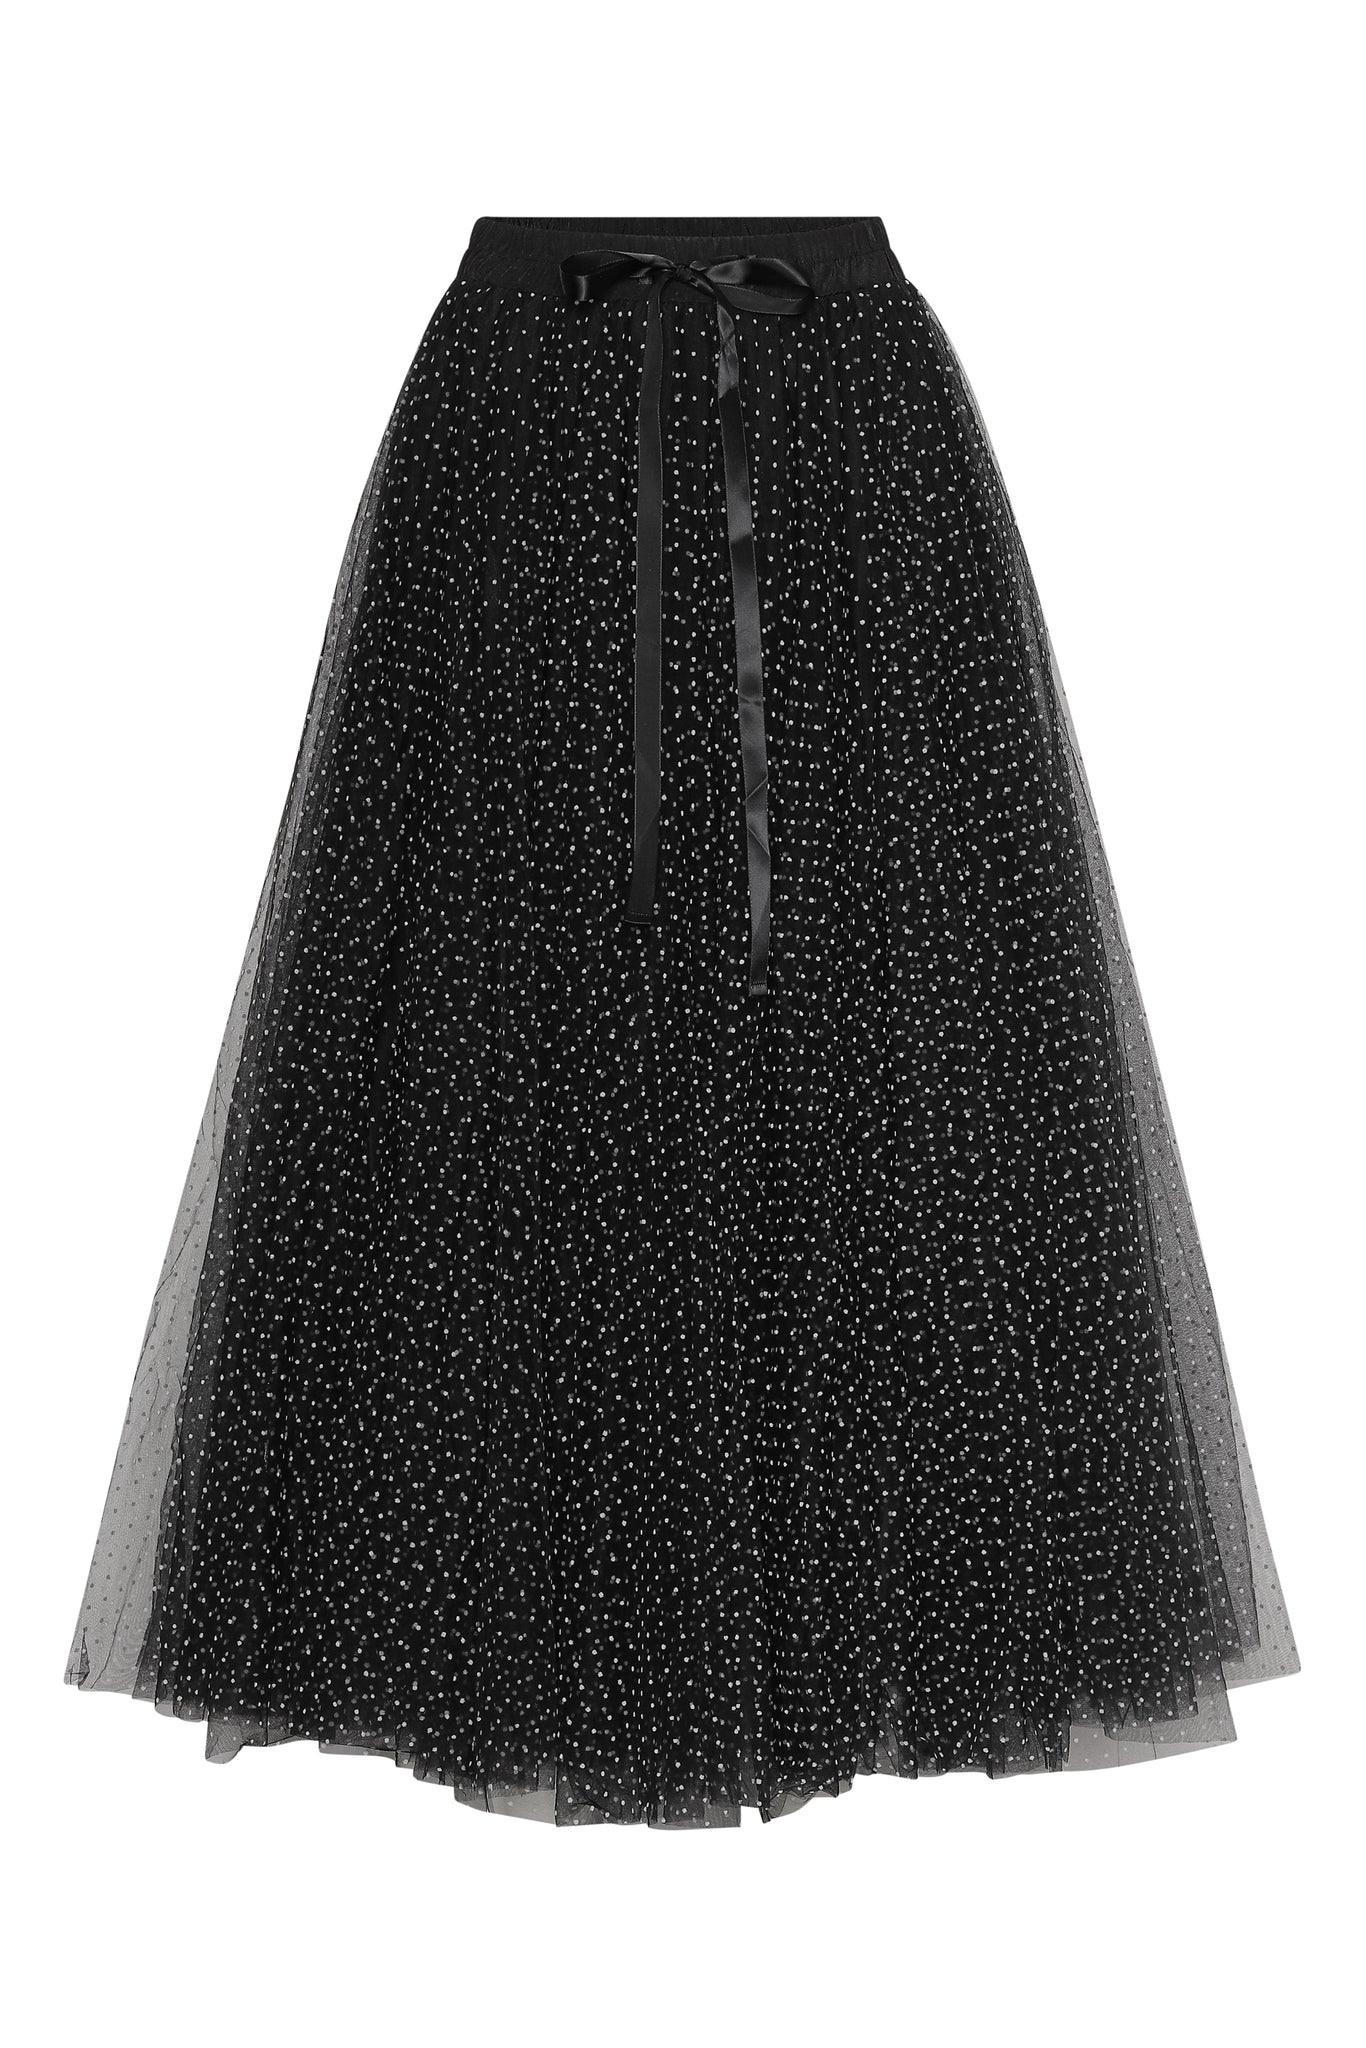 Daisy tyl skirt - black with dots